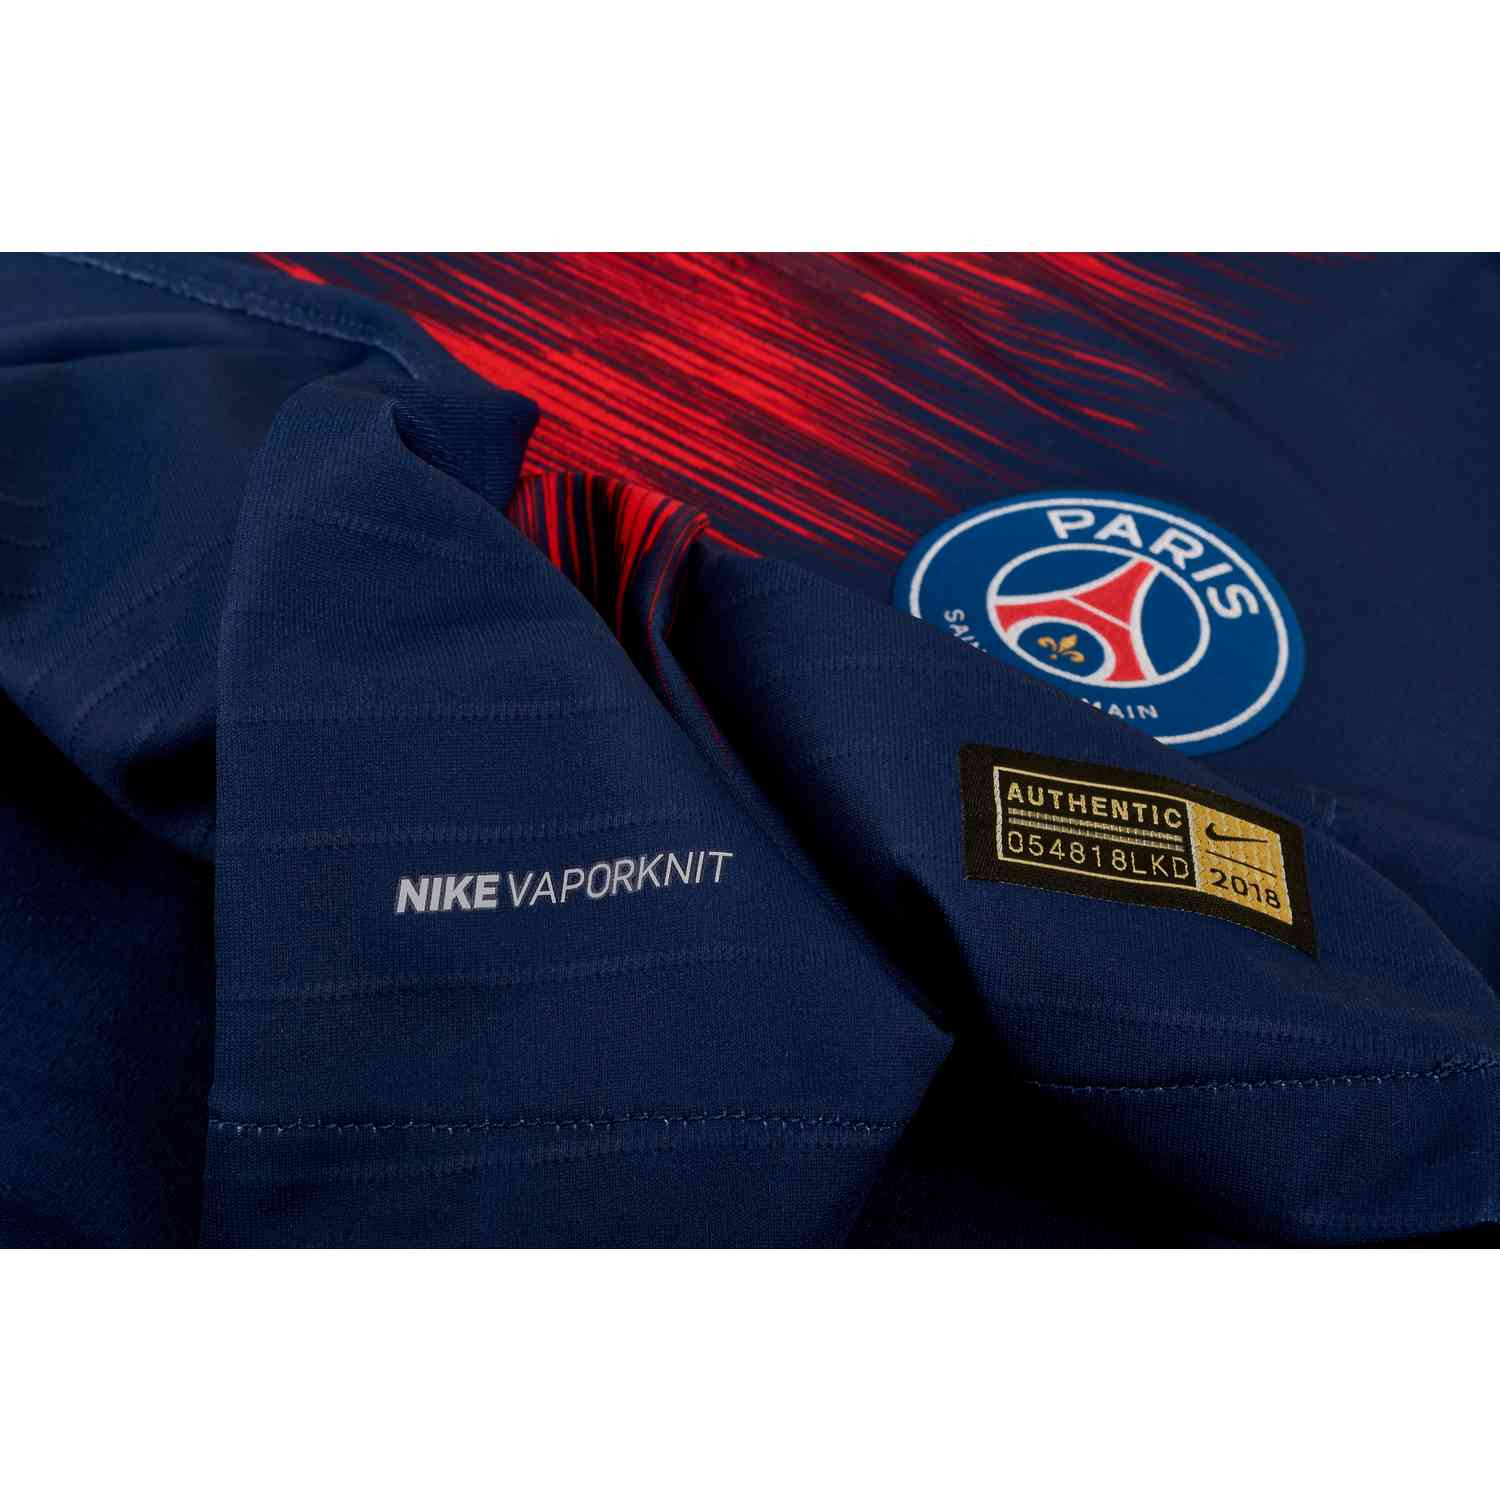 Paris Saint Germain PSG Nike VaporKnit 2018 Home Jersey Navy 894419-411  Mens XL